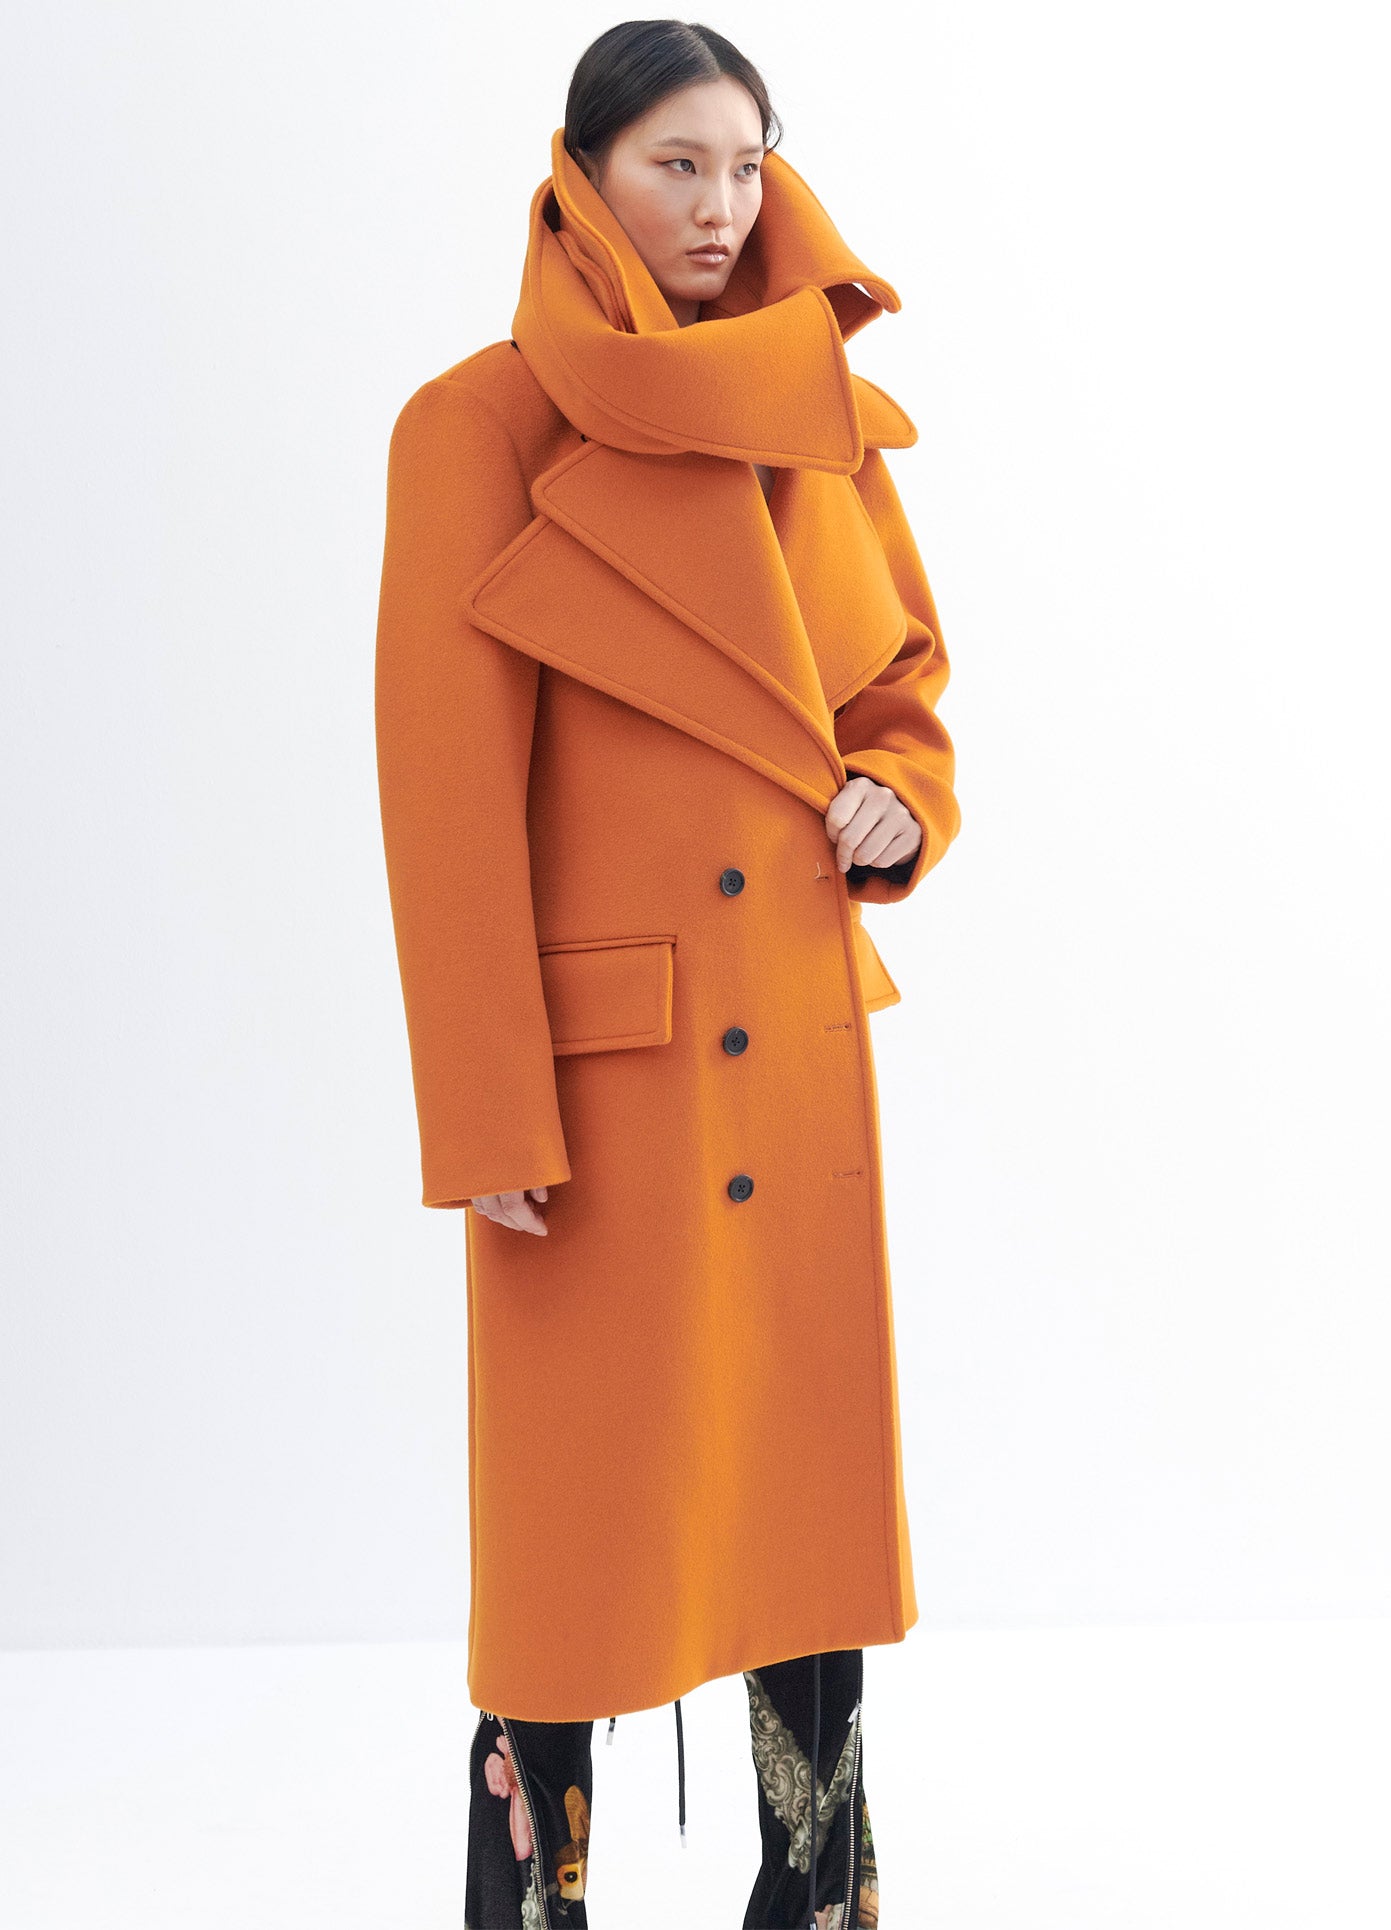 MONSE Double Collar Coat in Orange on Model Full Side View